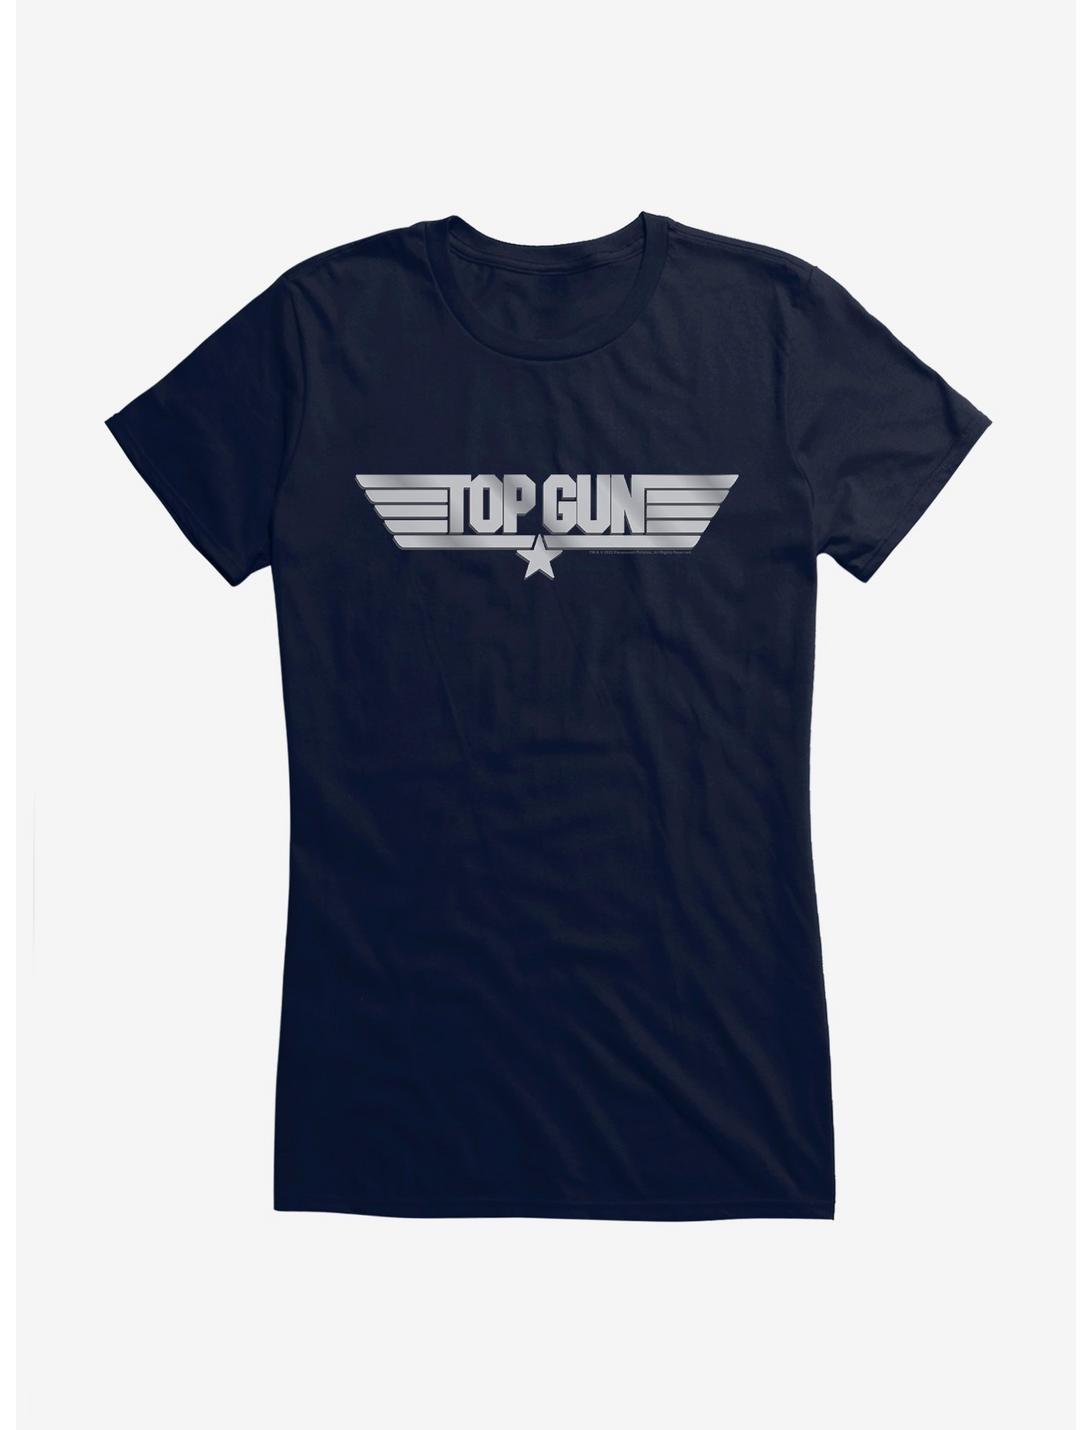 Top Gun Metal Logo Girls T-Shirt, , hi-res